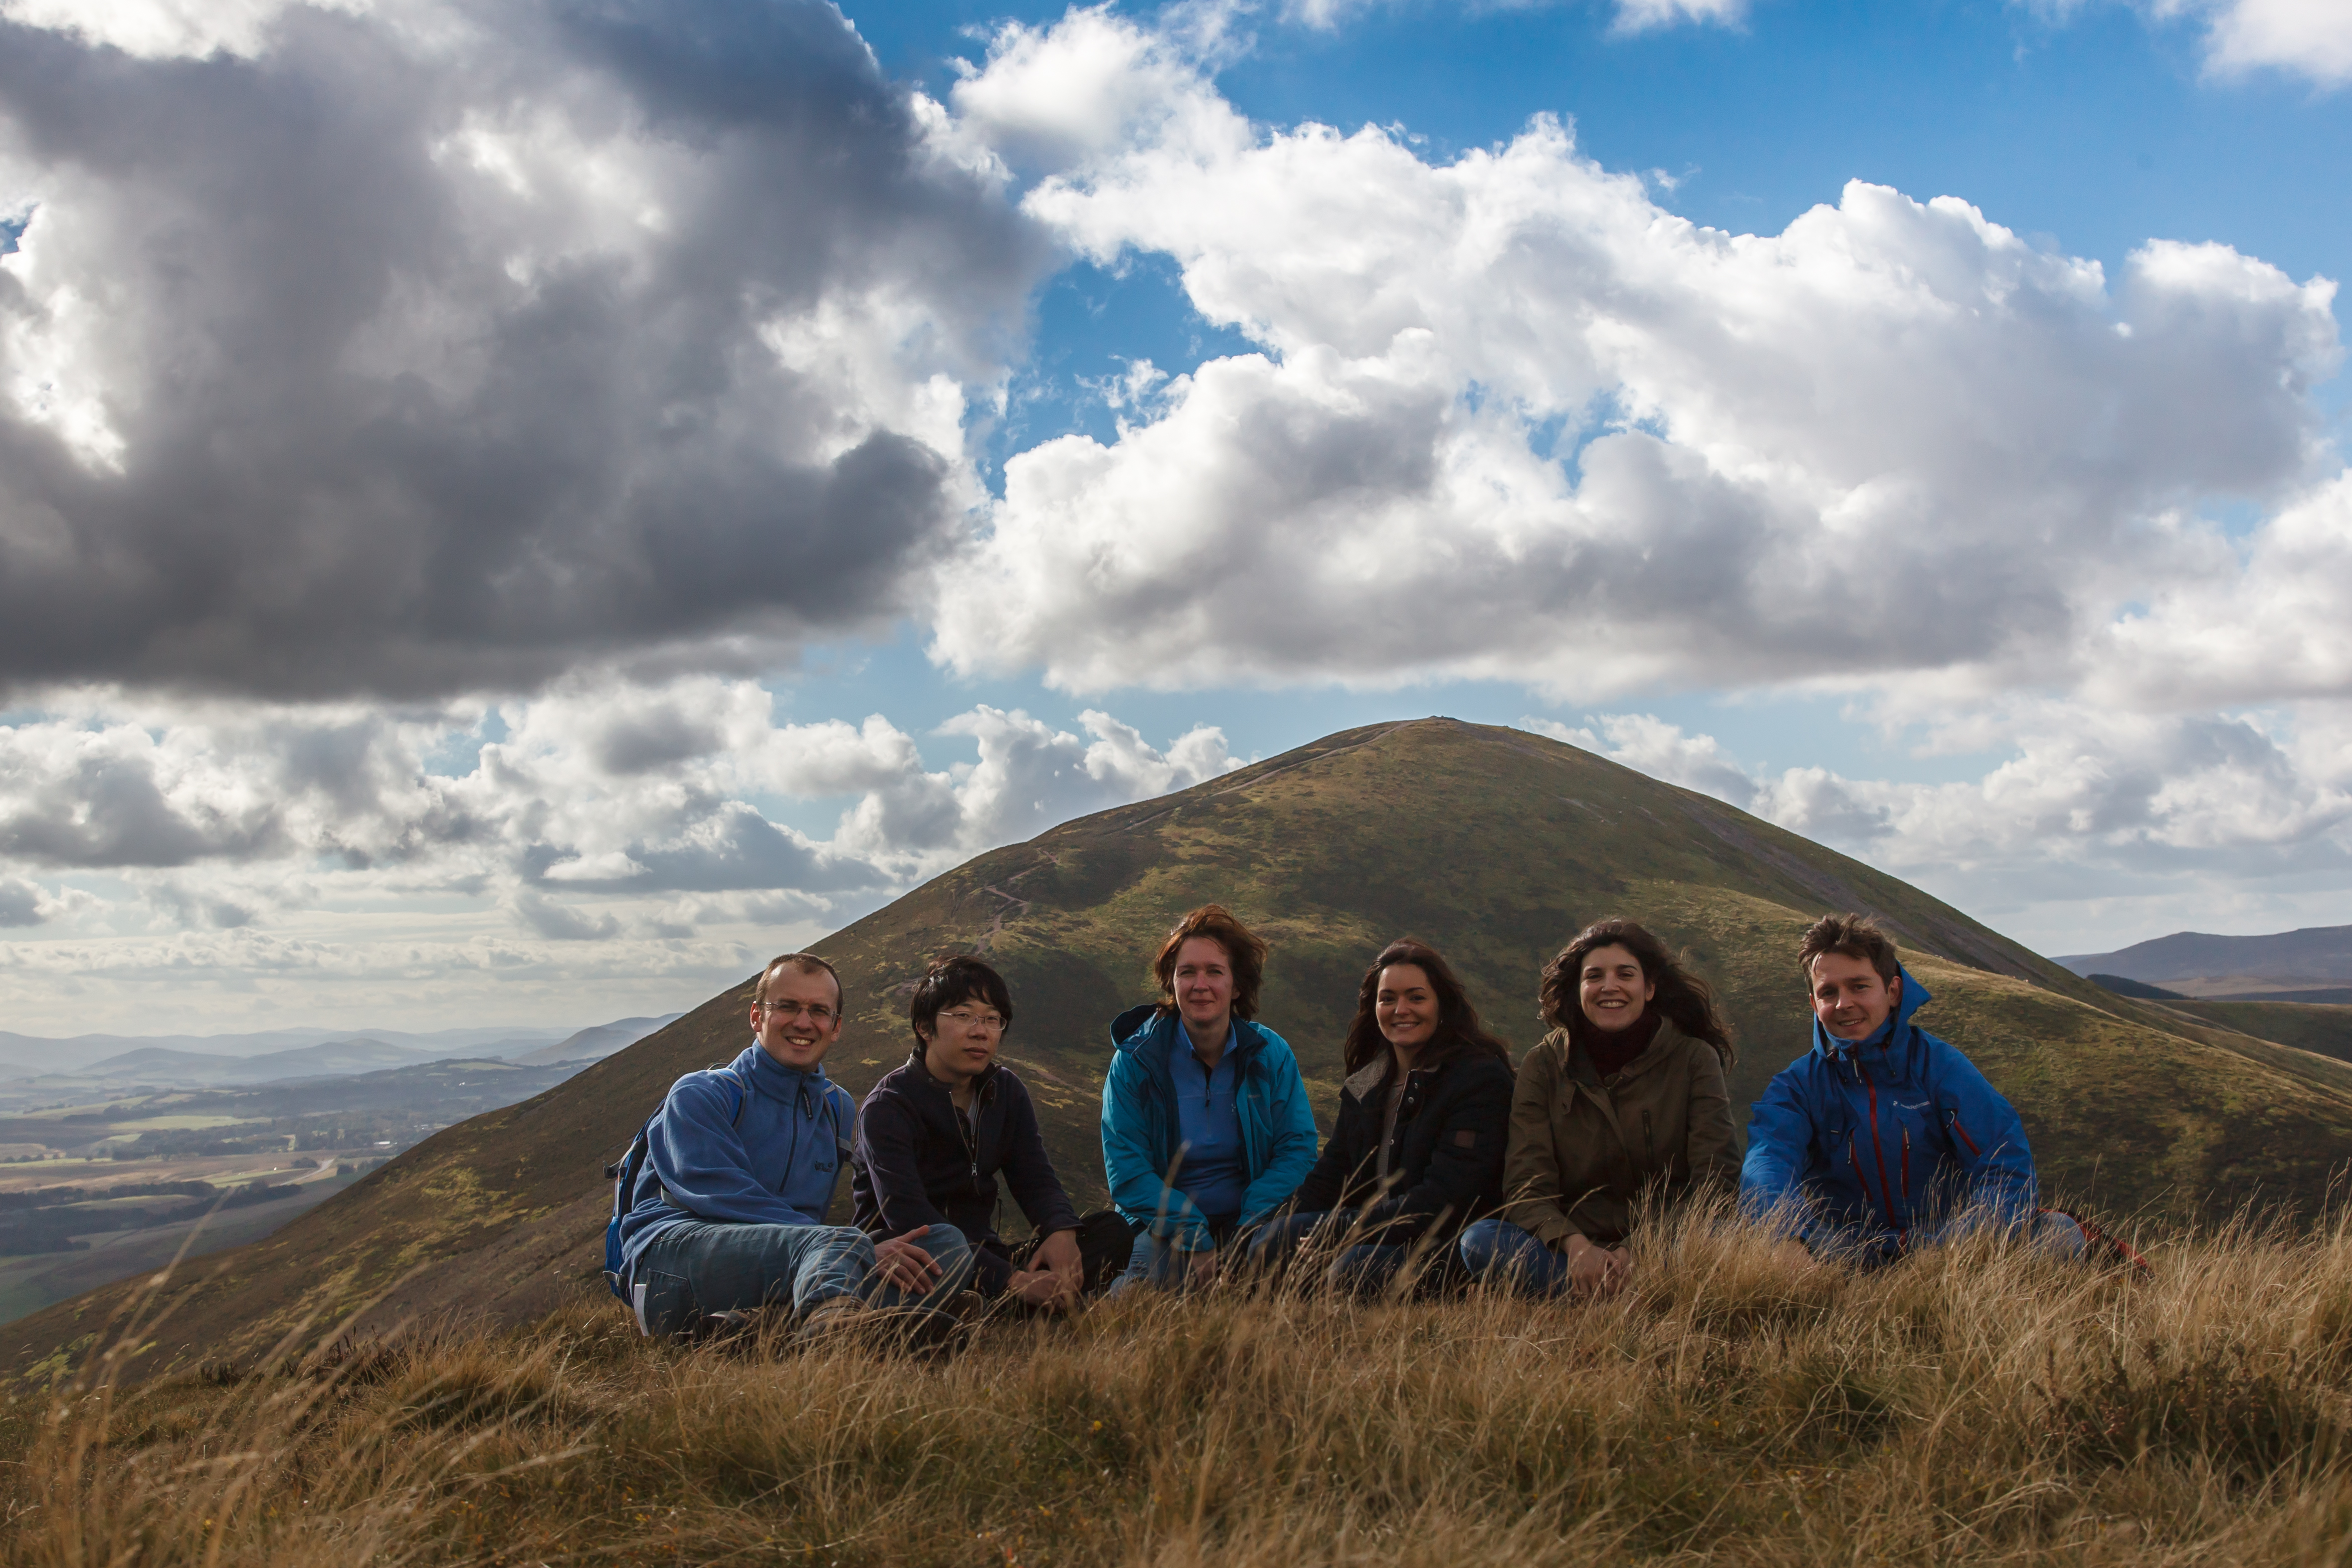 Image 25 Group photo on top of a hill near Edinburgh. From left to right: Konstantin, Tatsuro, Irina, Maria, Berta, Ulrich. 